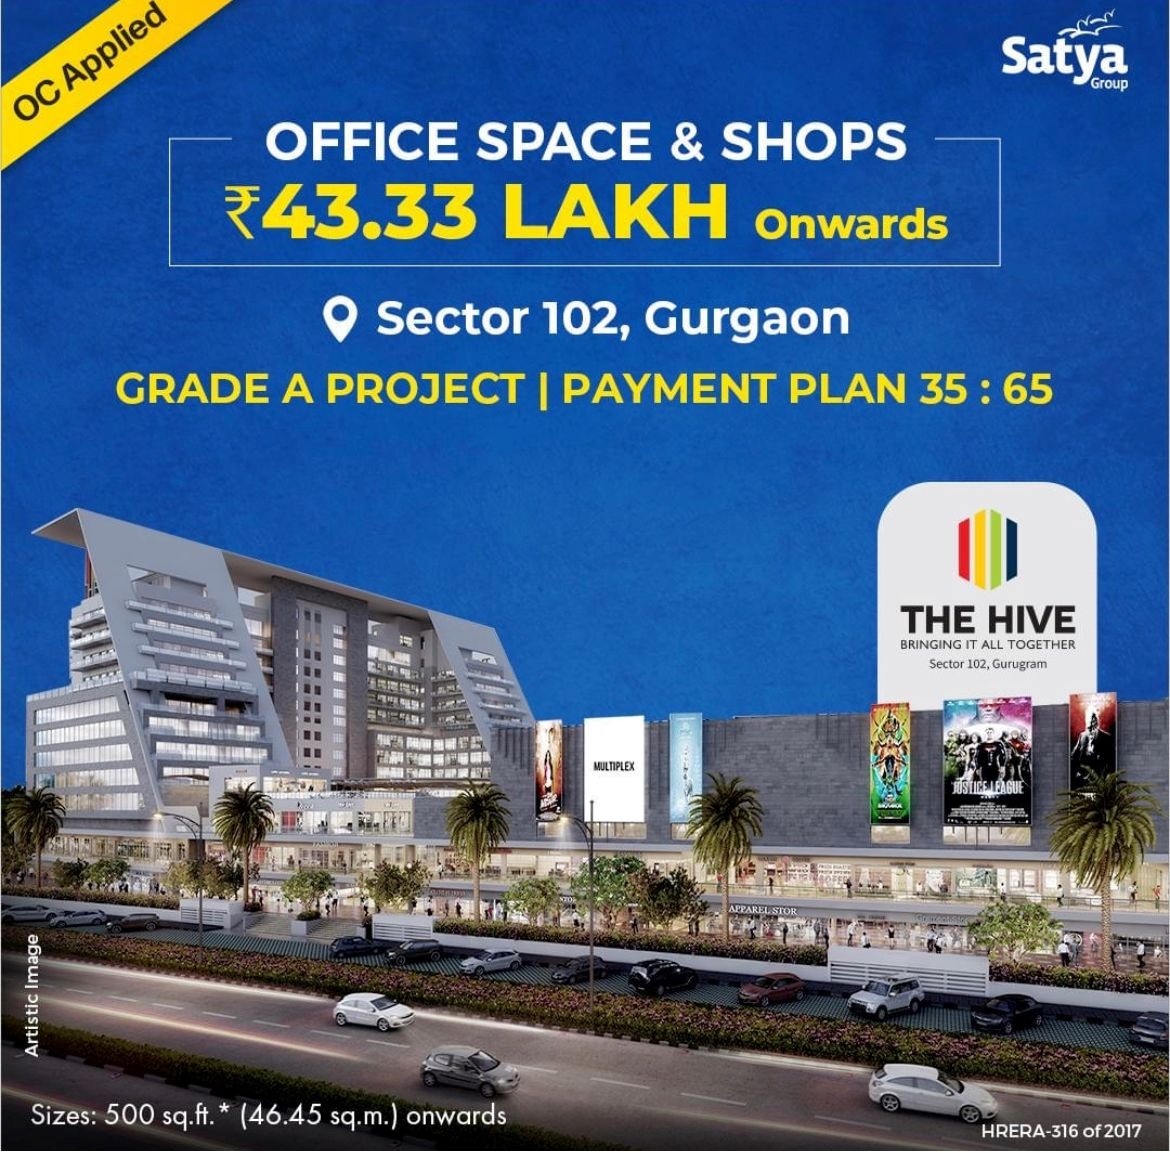 Presenting 35:65 payment plan at Satya The Hive, Gurgaon Update